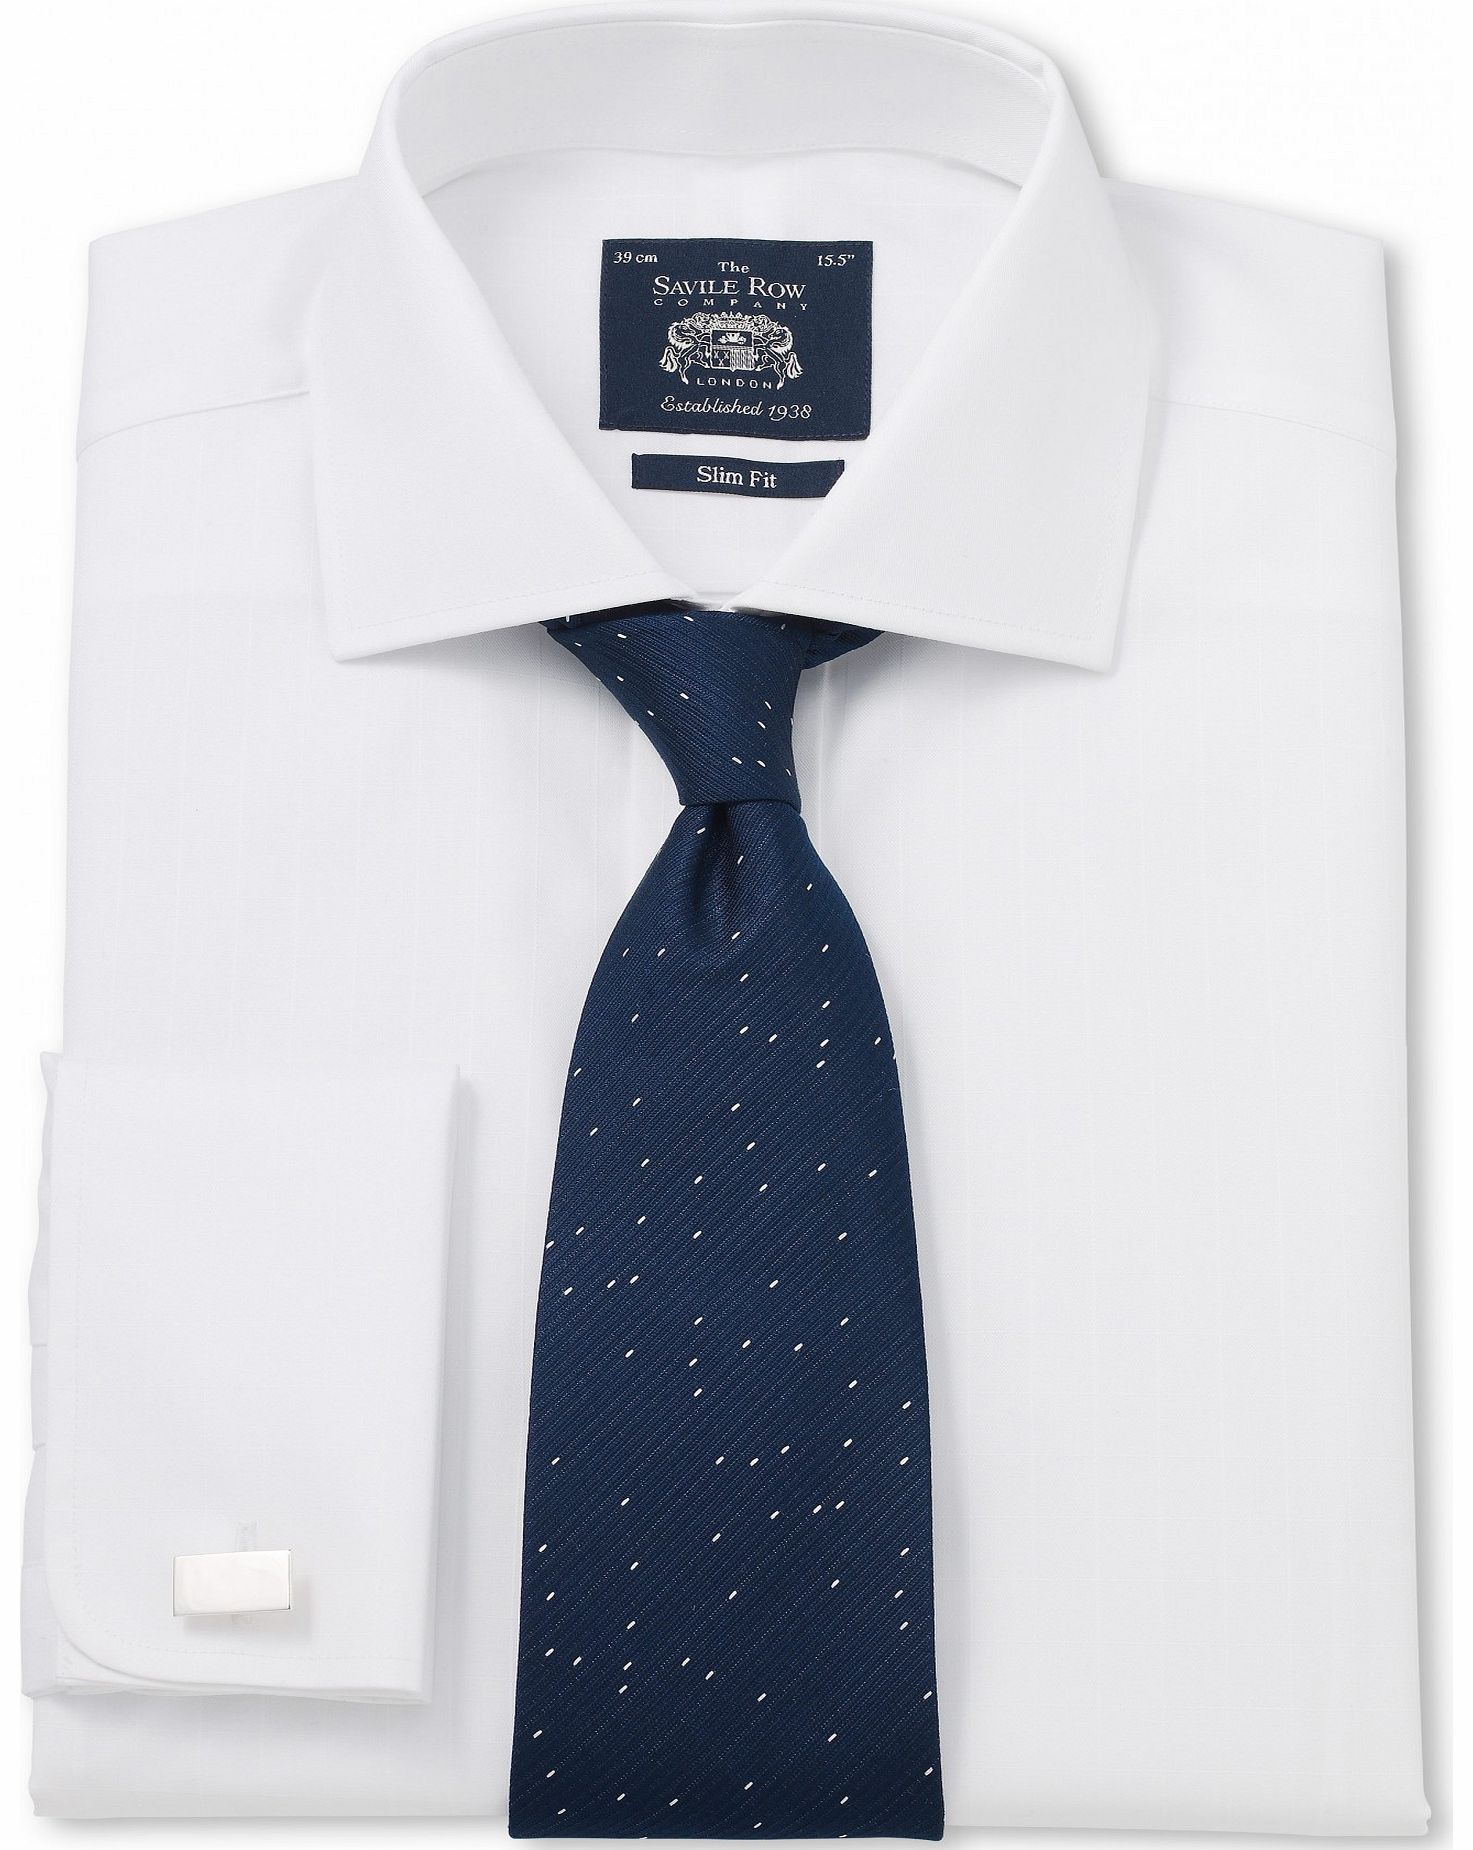 Savile Row Company White Poplin Check Slim Fit Shirt 17`` Double